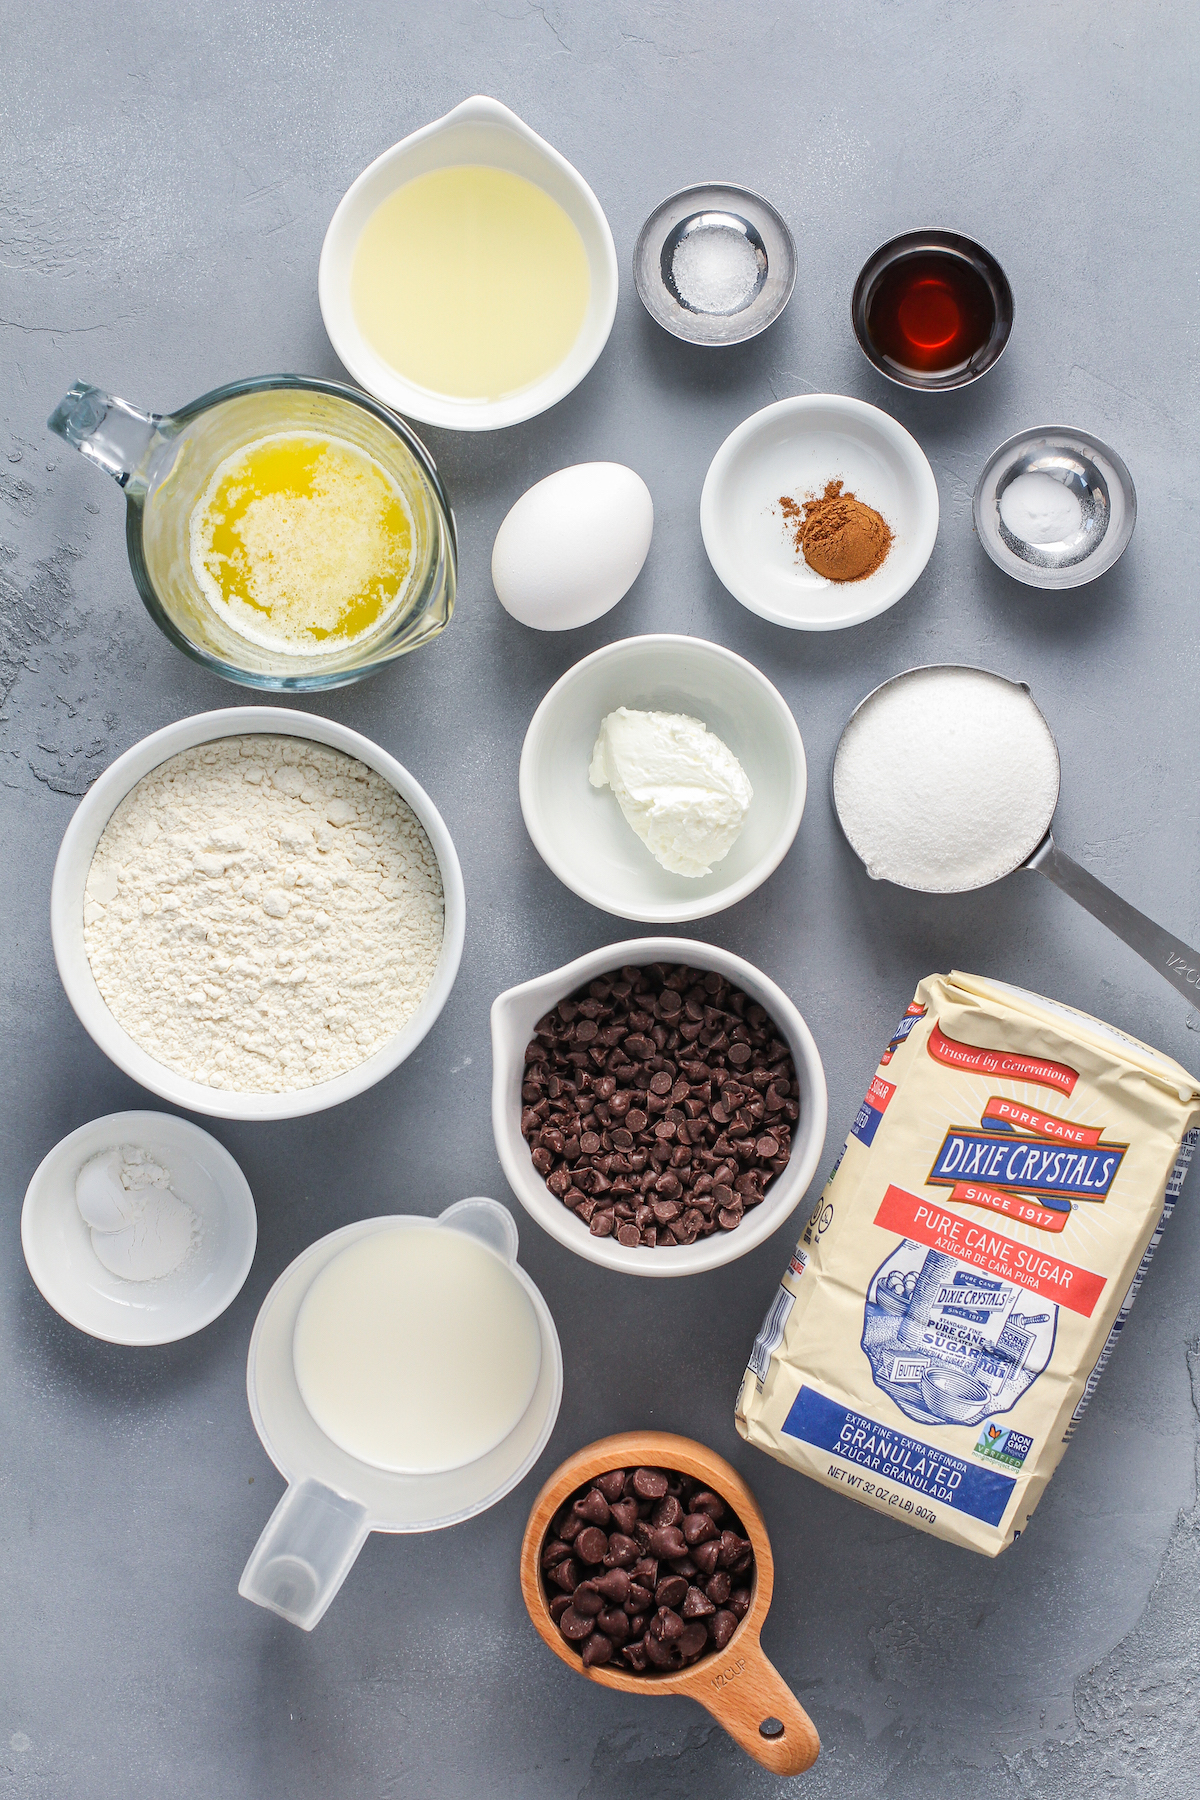 From top left: Oil, salt, vanilla, melted butter, egg, cinnamon, baking powder, flour, sour cream, sugar, baking powder, chocolate chip, milk, mini chocolate chips.